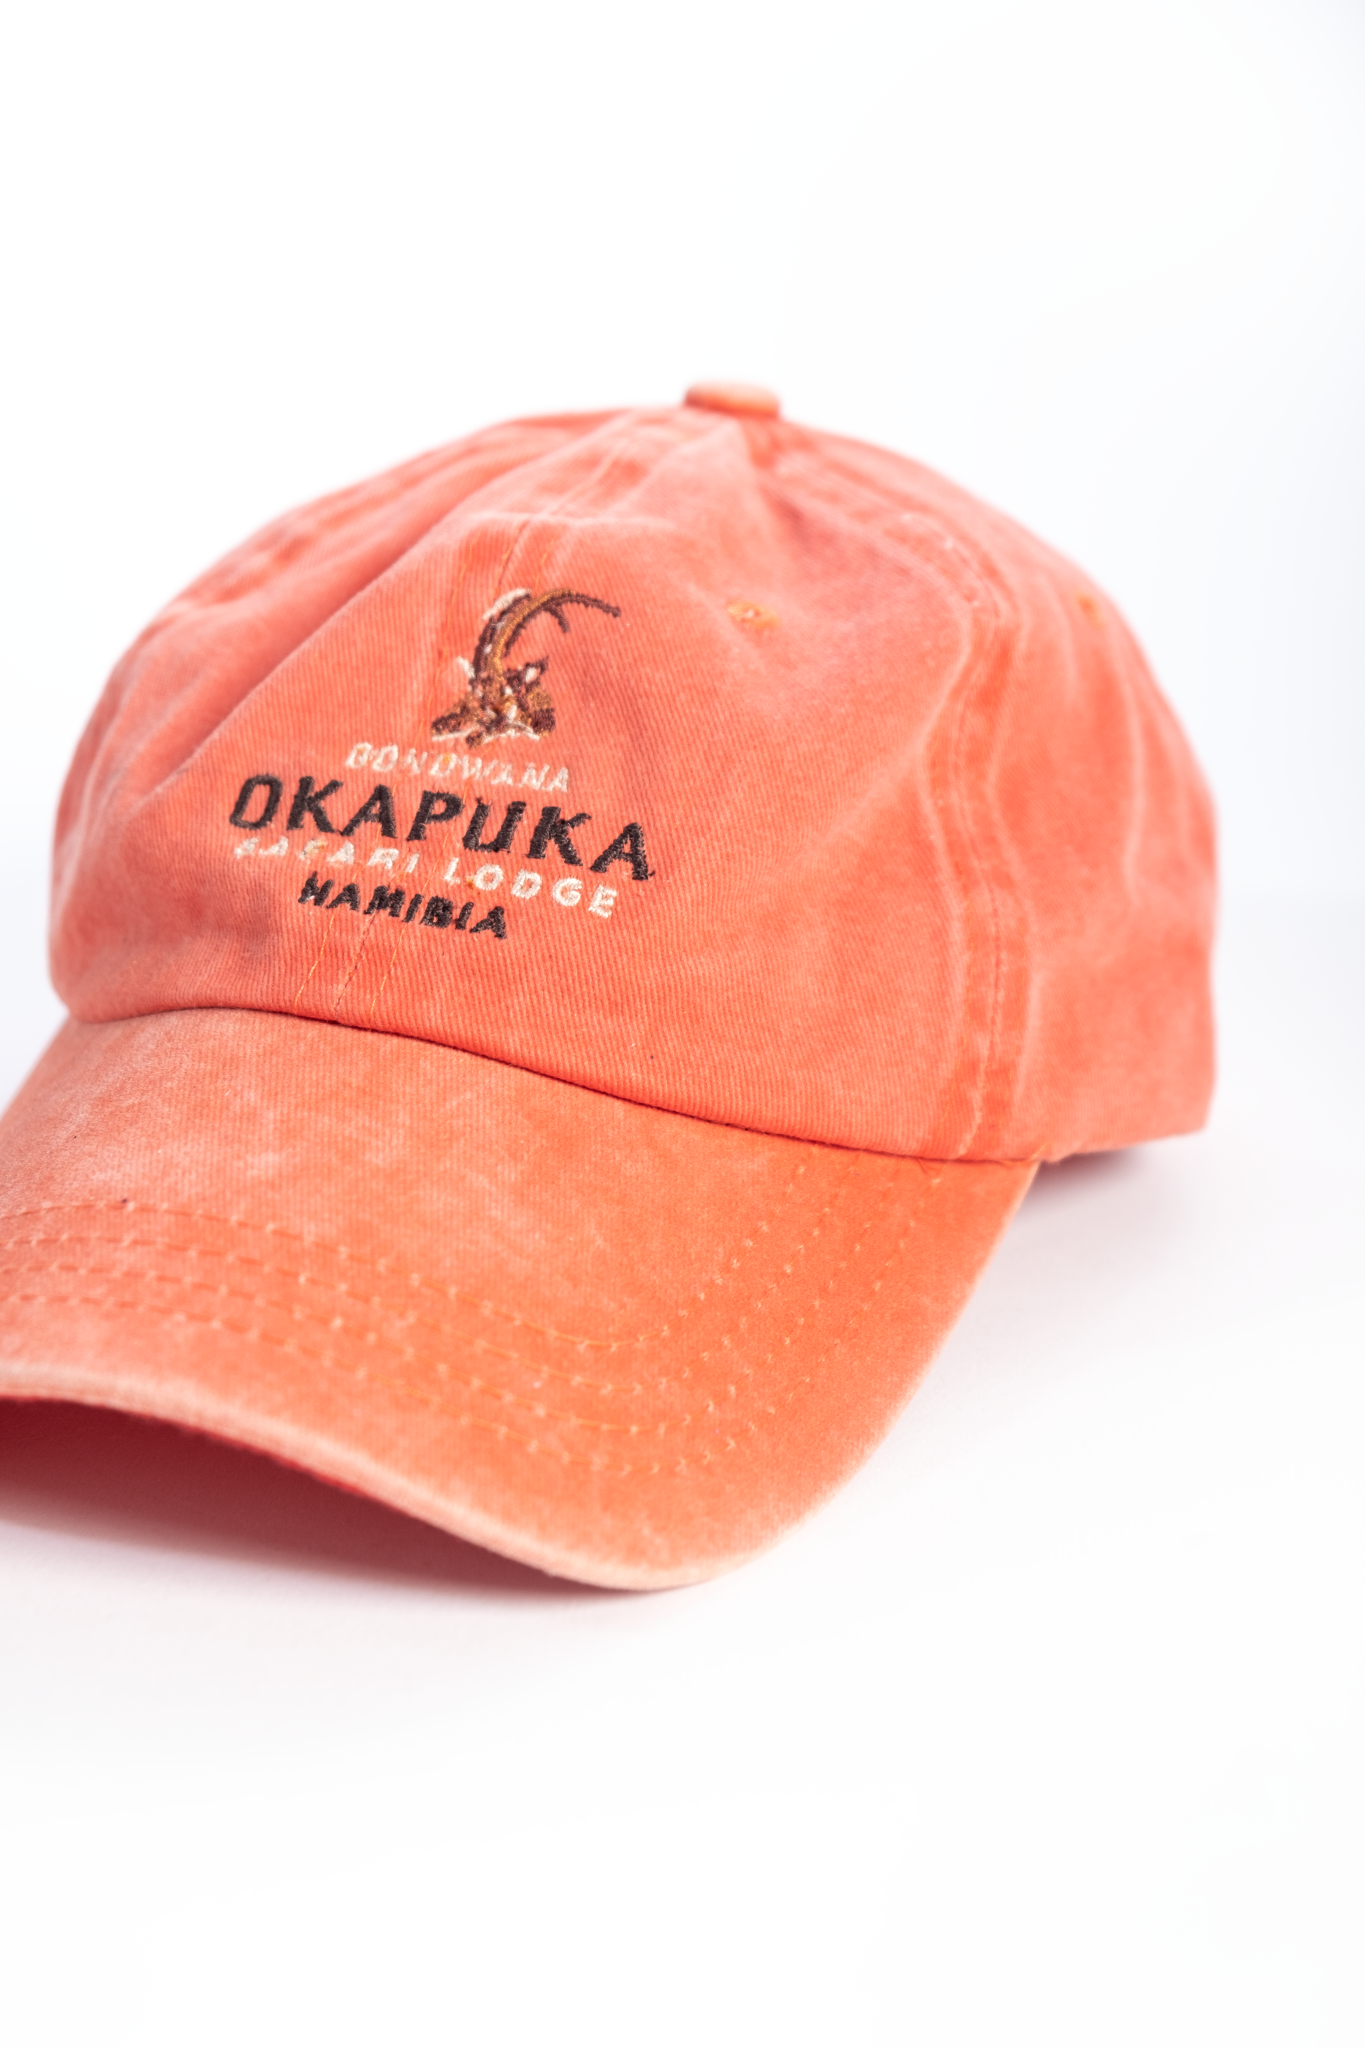 Okapuka Safari Lodge Logo Cap